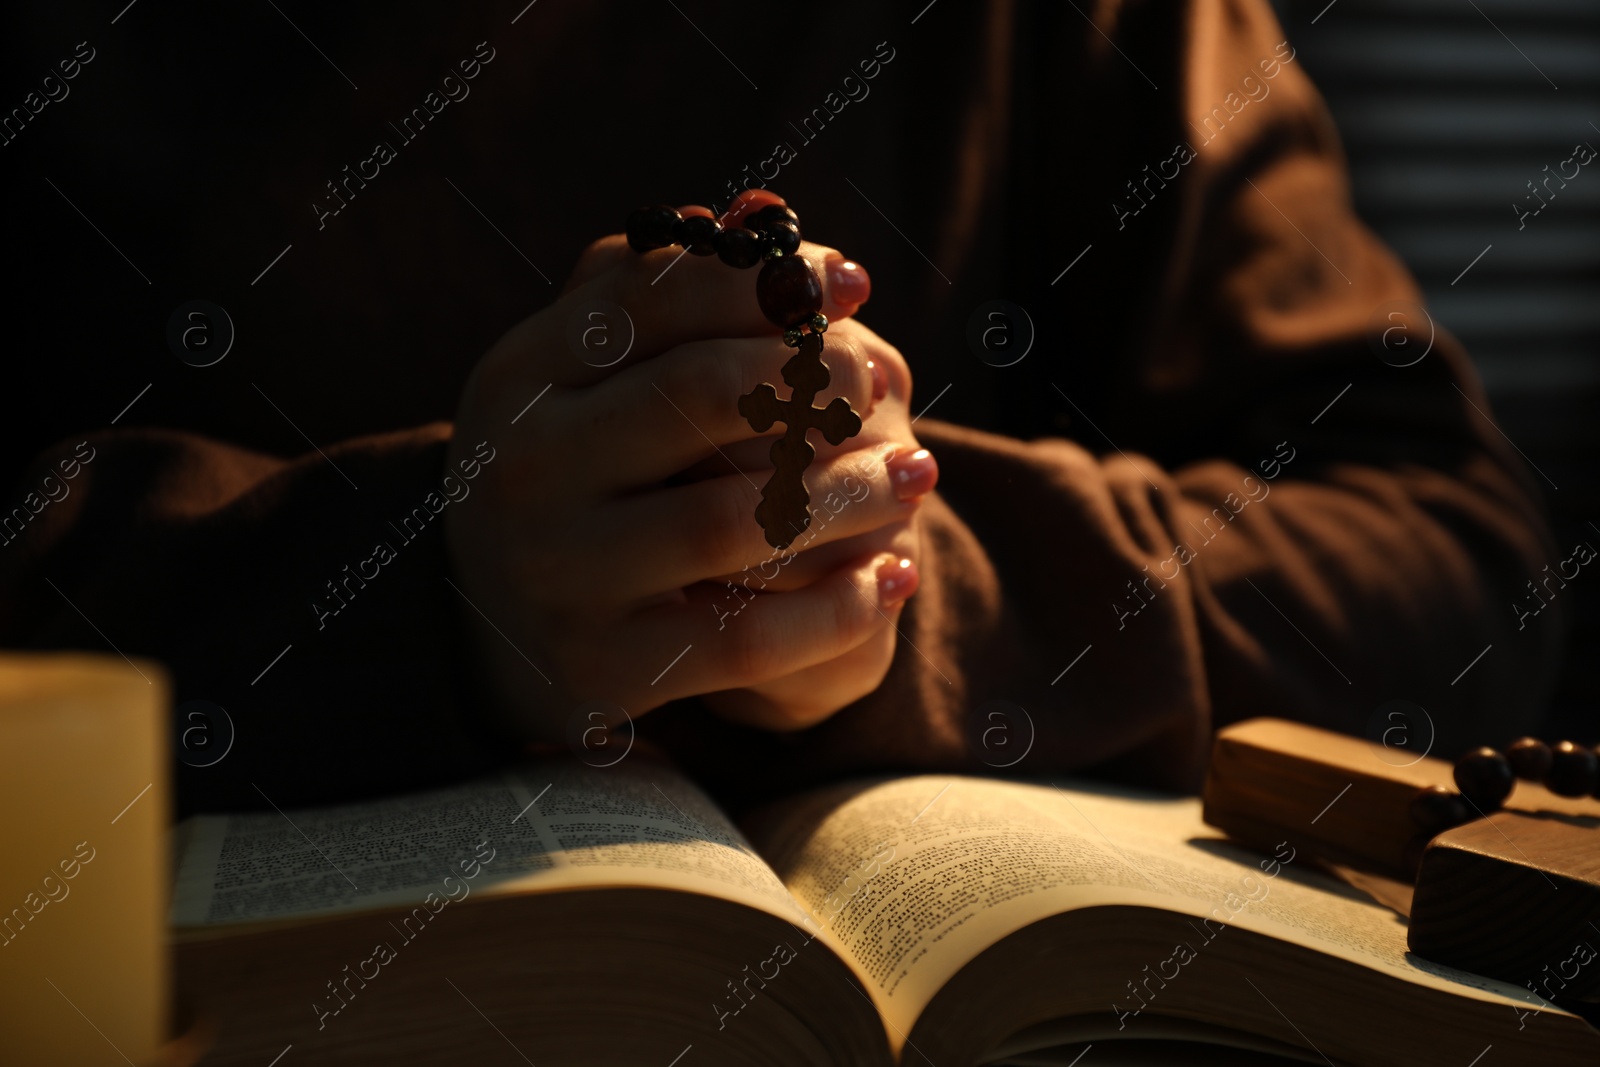 Photo of Woman with Bible praying at table, closeup